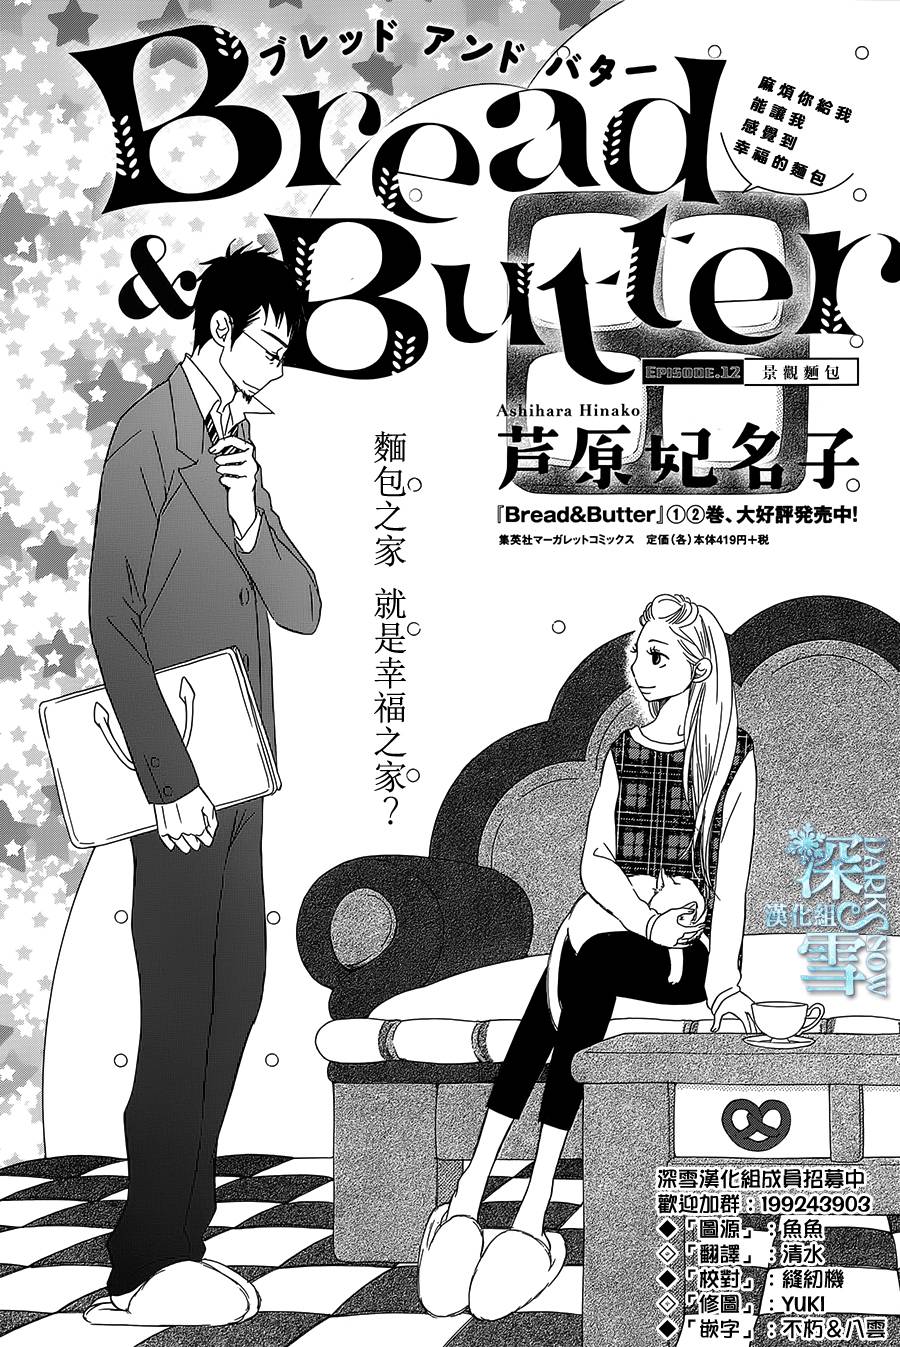 Bread Butter 第12話 漫畫線上看 動漫戲說 Acgn Cc